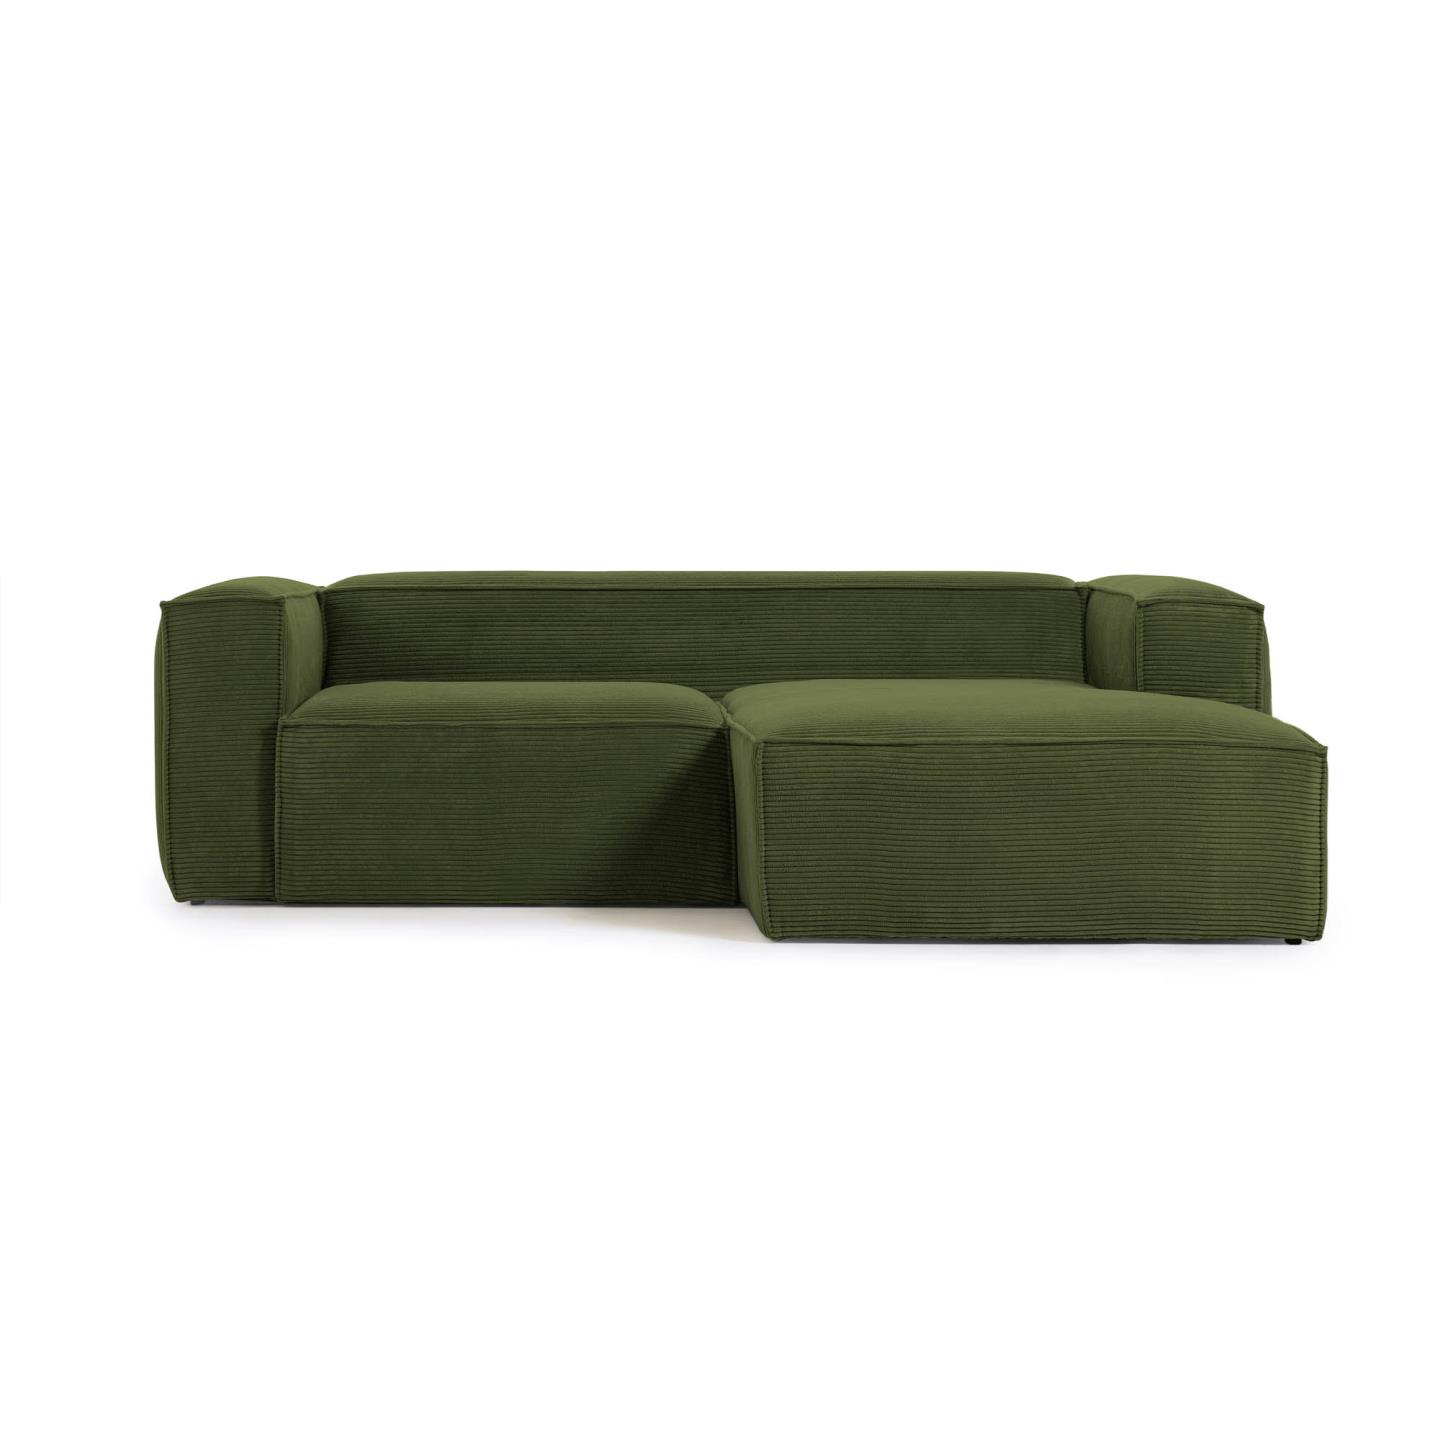 LAFORMA Blok 2 pers. sofa, m. højre chaiselong - grøn corduroy fløjl (240 cm)